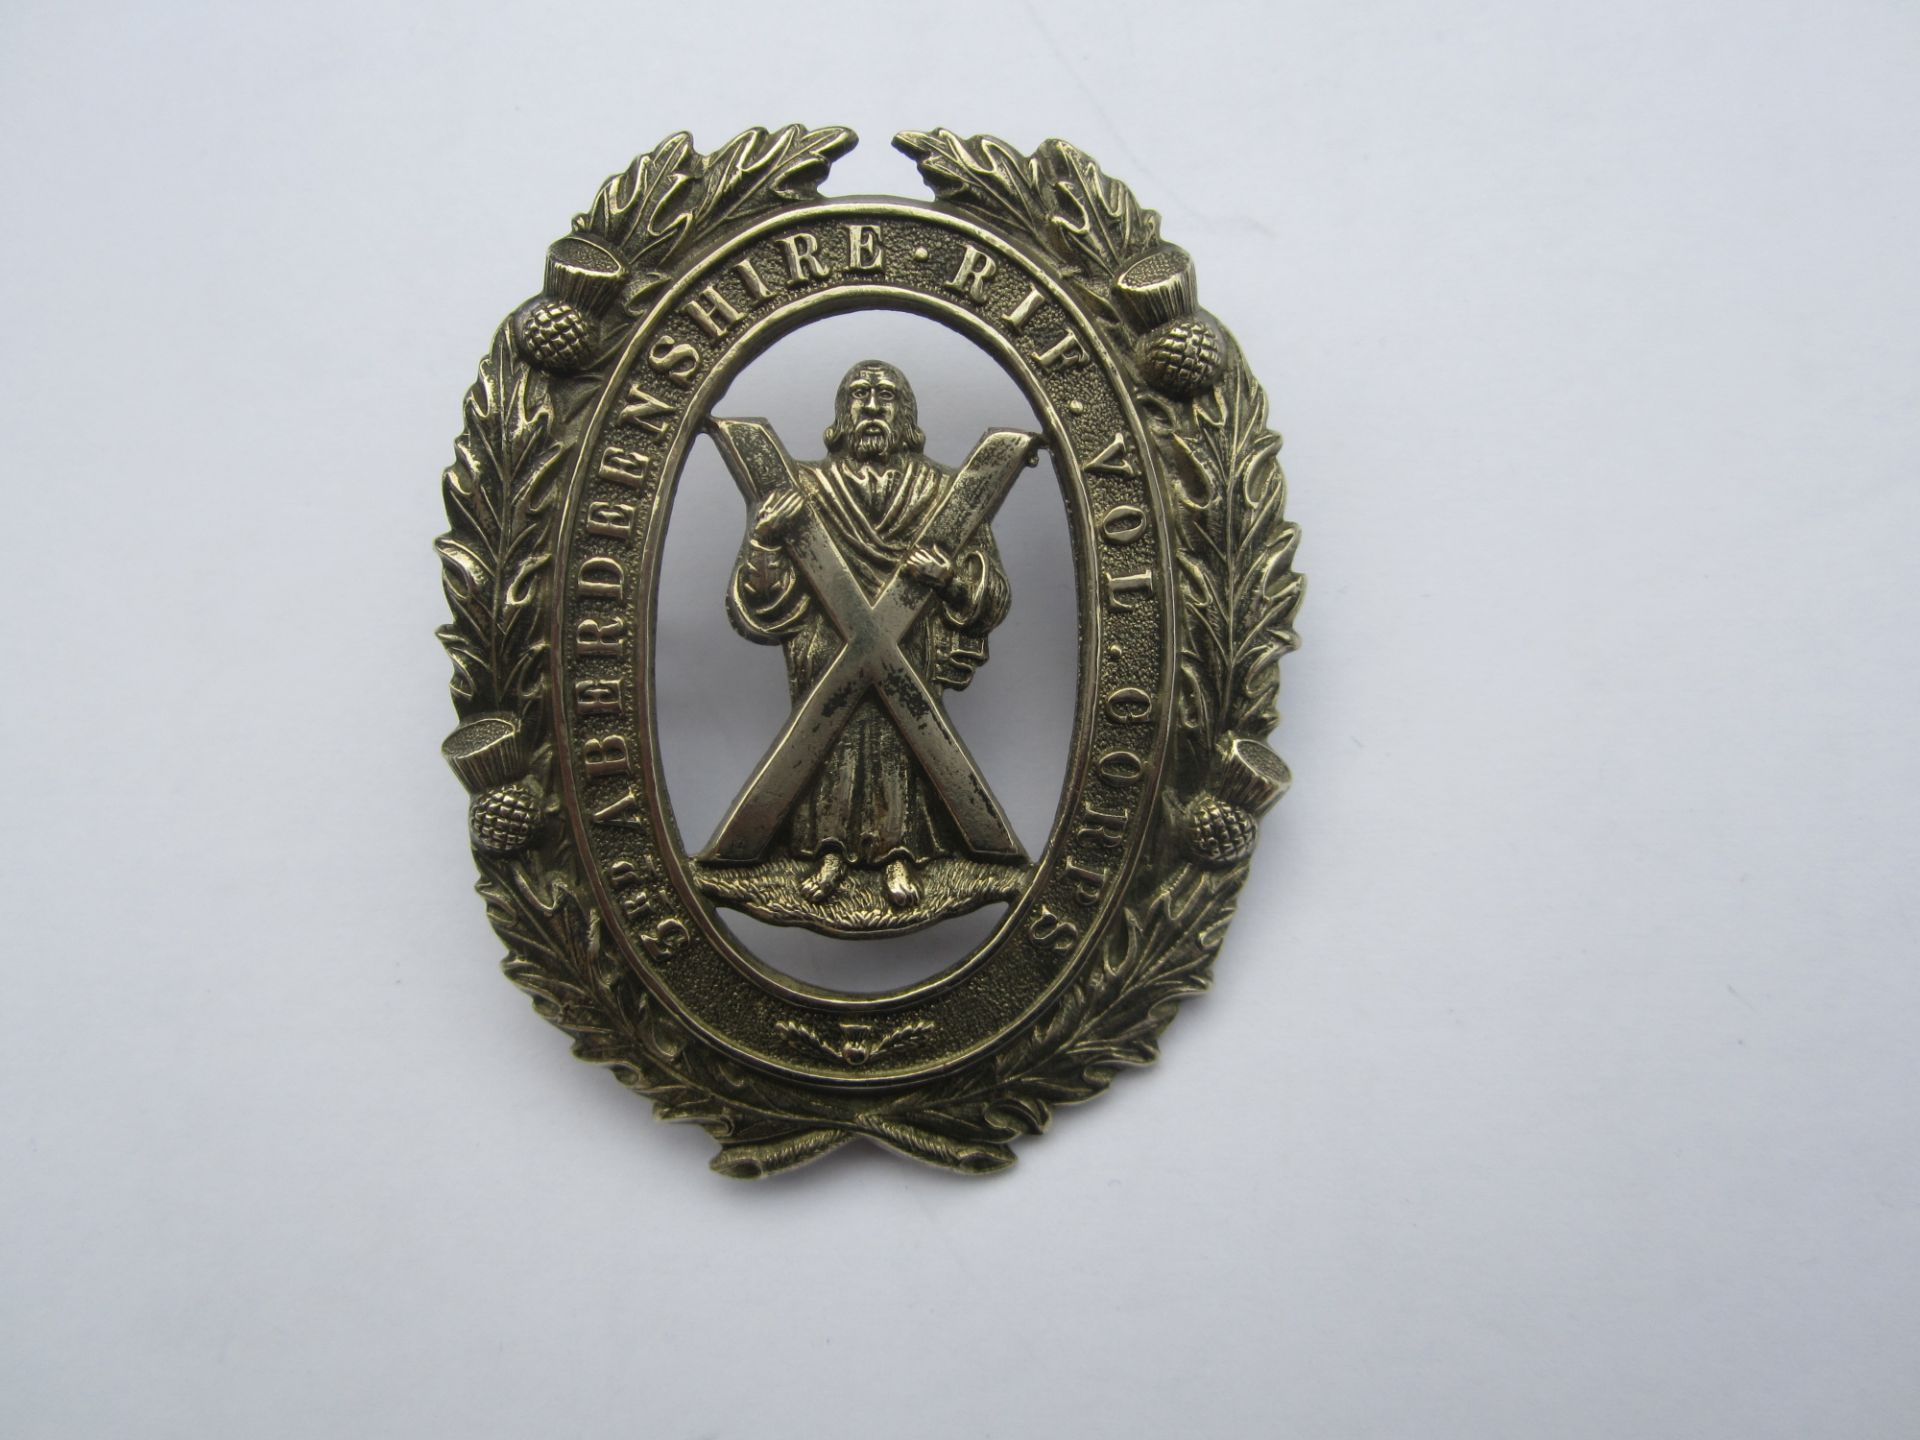 3rd Aberdeenshire Rifle Volunteers Other Ranks Glengarry Badge c.1880-1884,